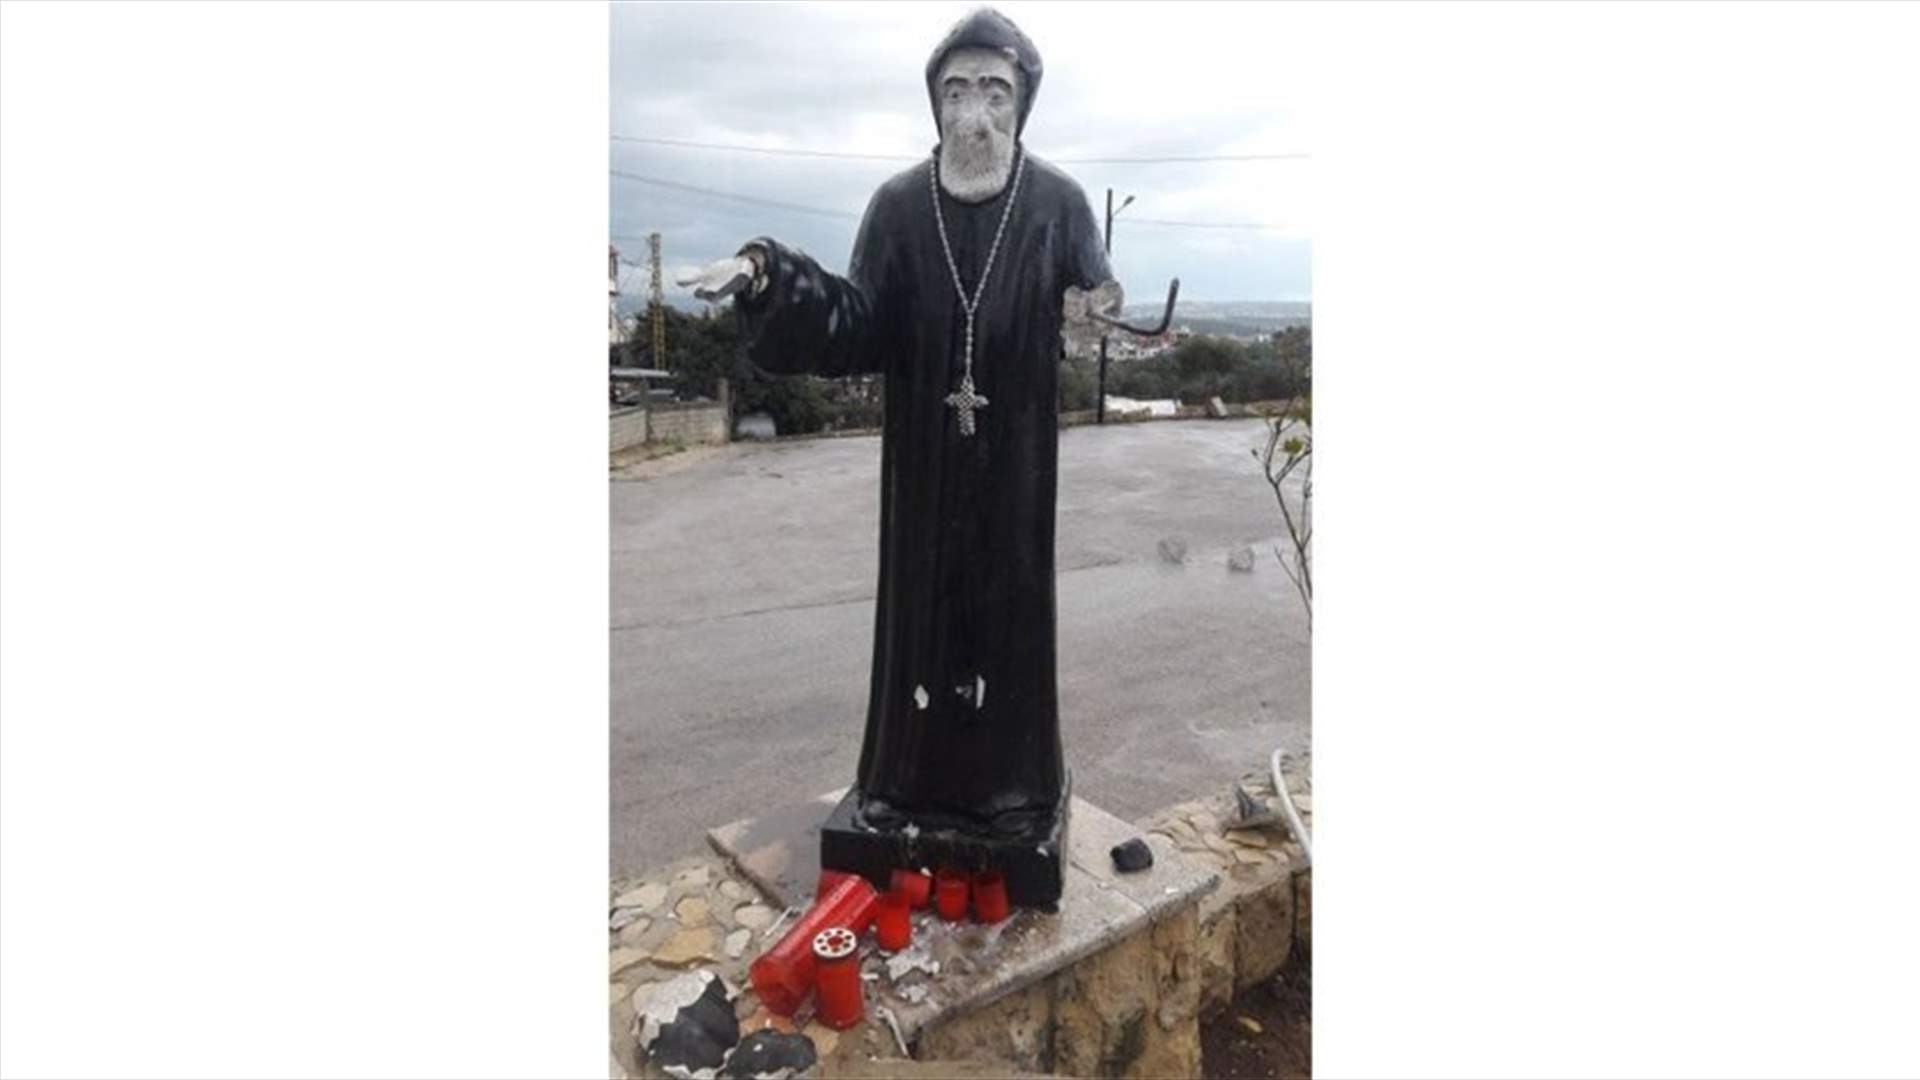 [PHOTO] Saint Charbel statue vandalized in Zgharta